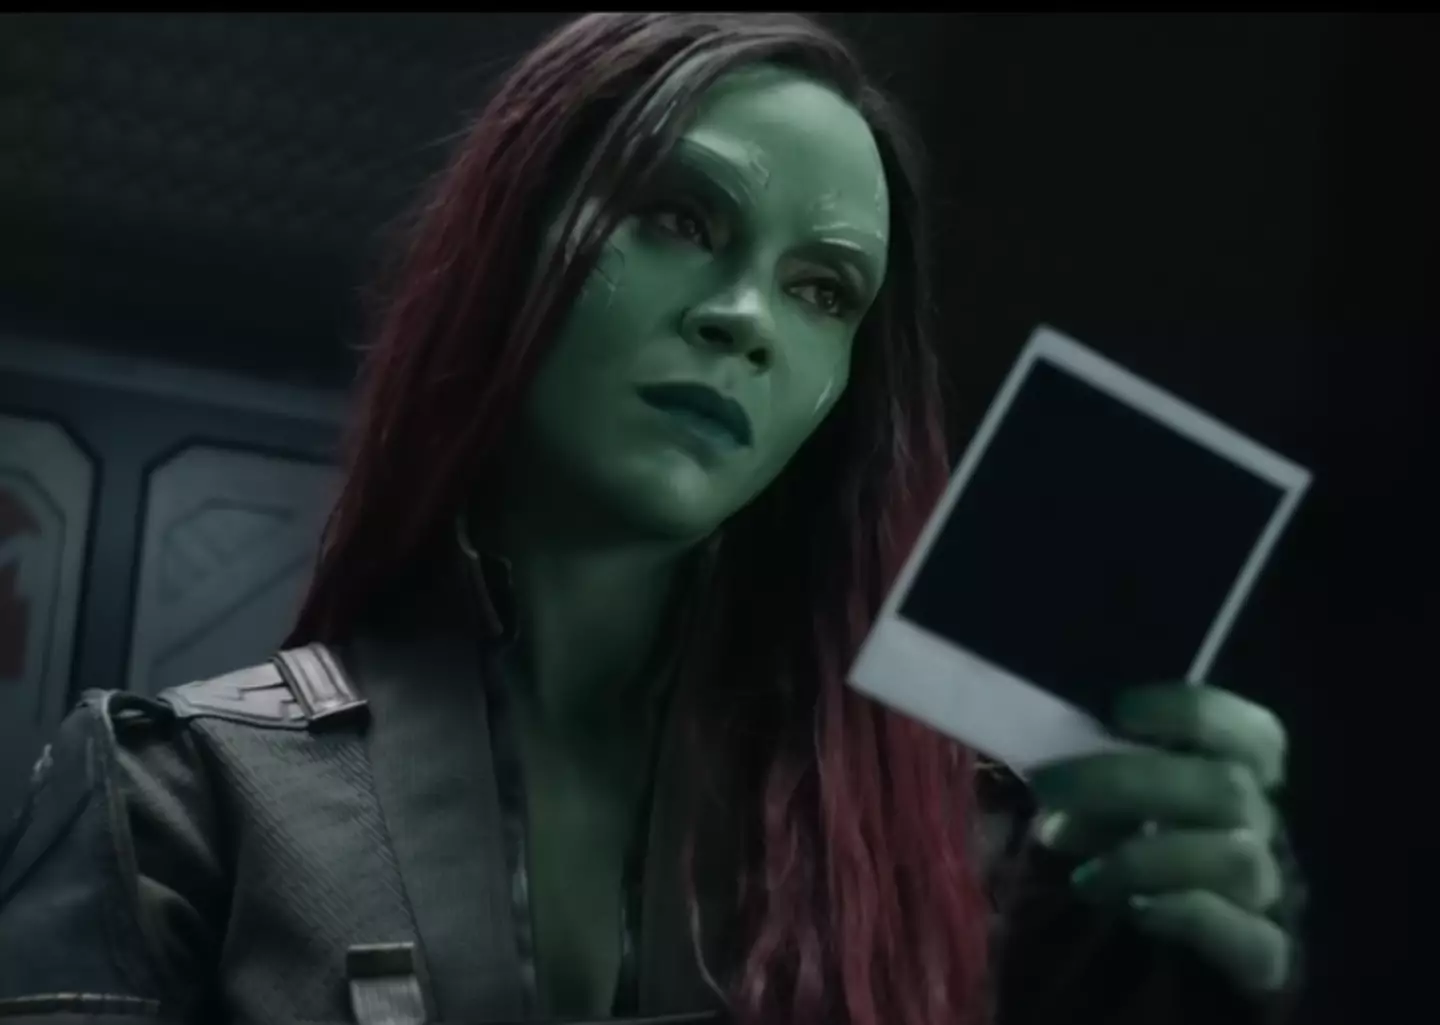 Fans have been left baffled over Gamora's appearance.